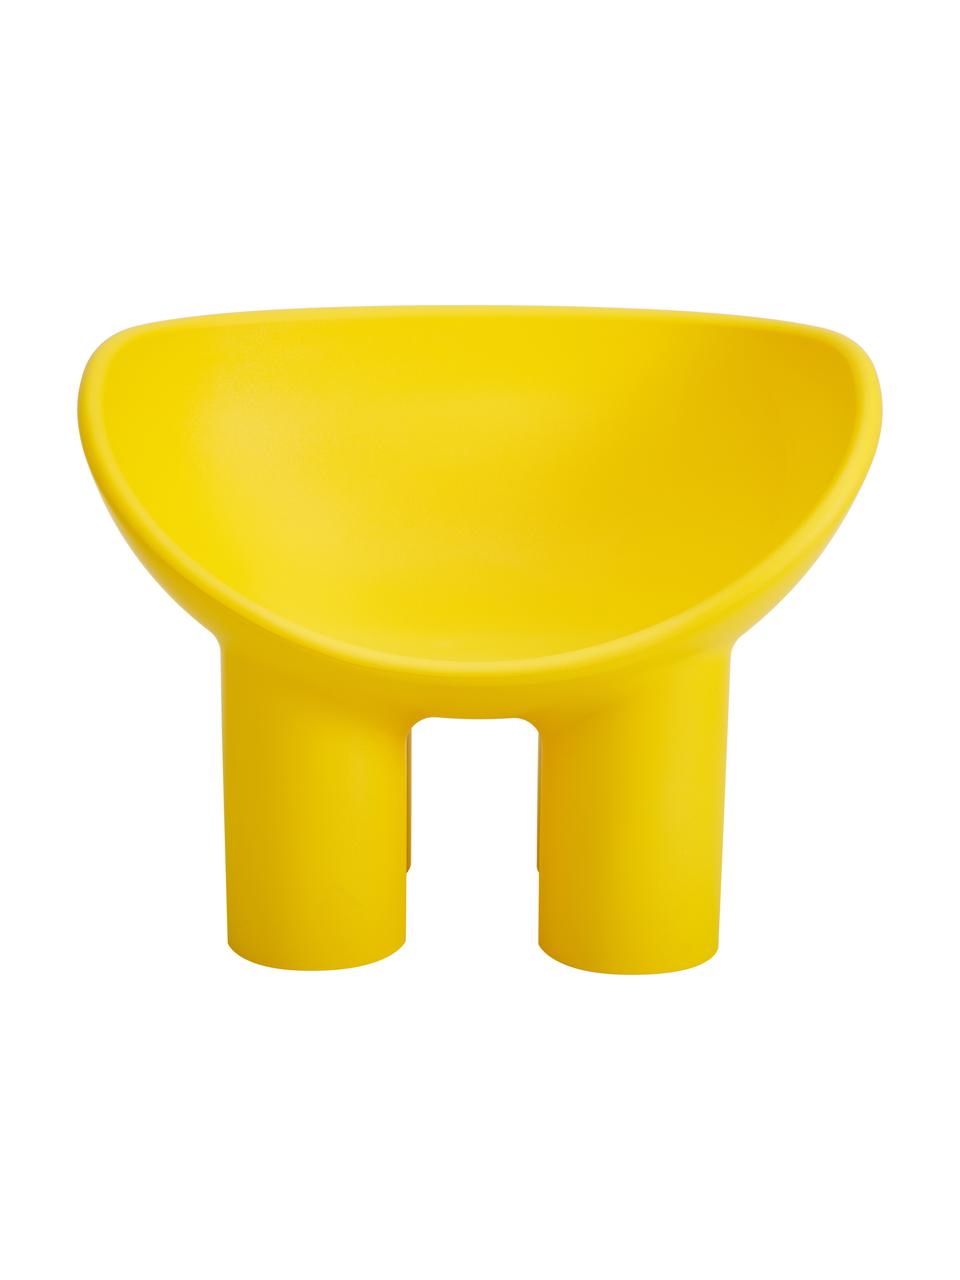 Designer Sessel Roly Poly in Ockergelb, Polyethylen, im Rotationsgussverfahren hergestellt, Gelb, B 84 x T 57 cm